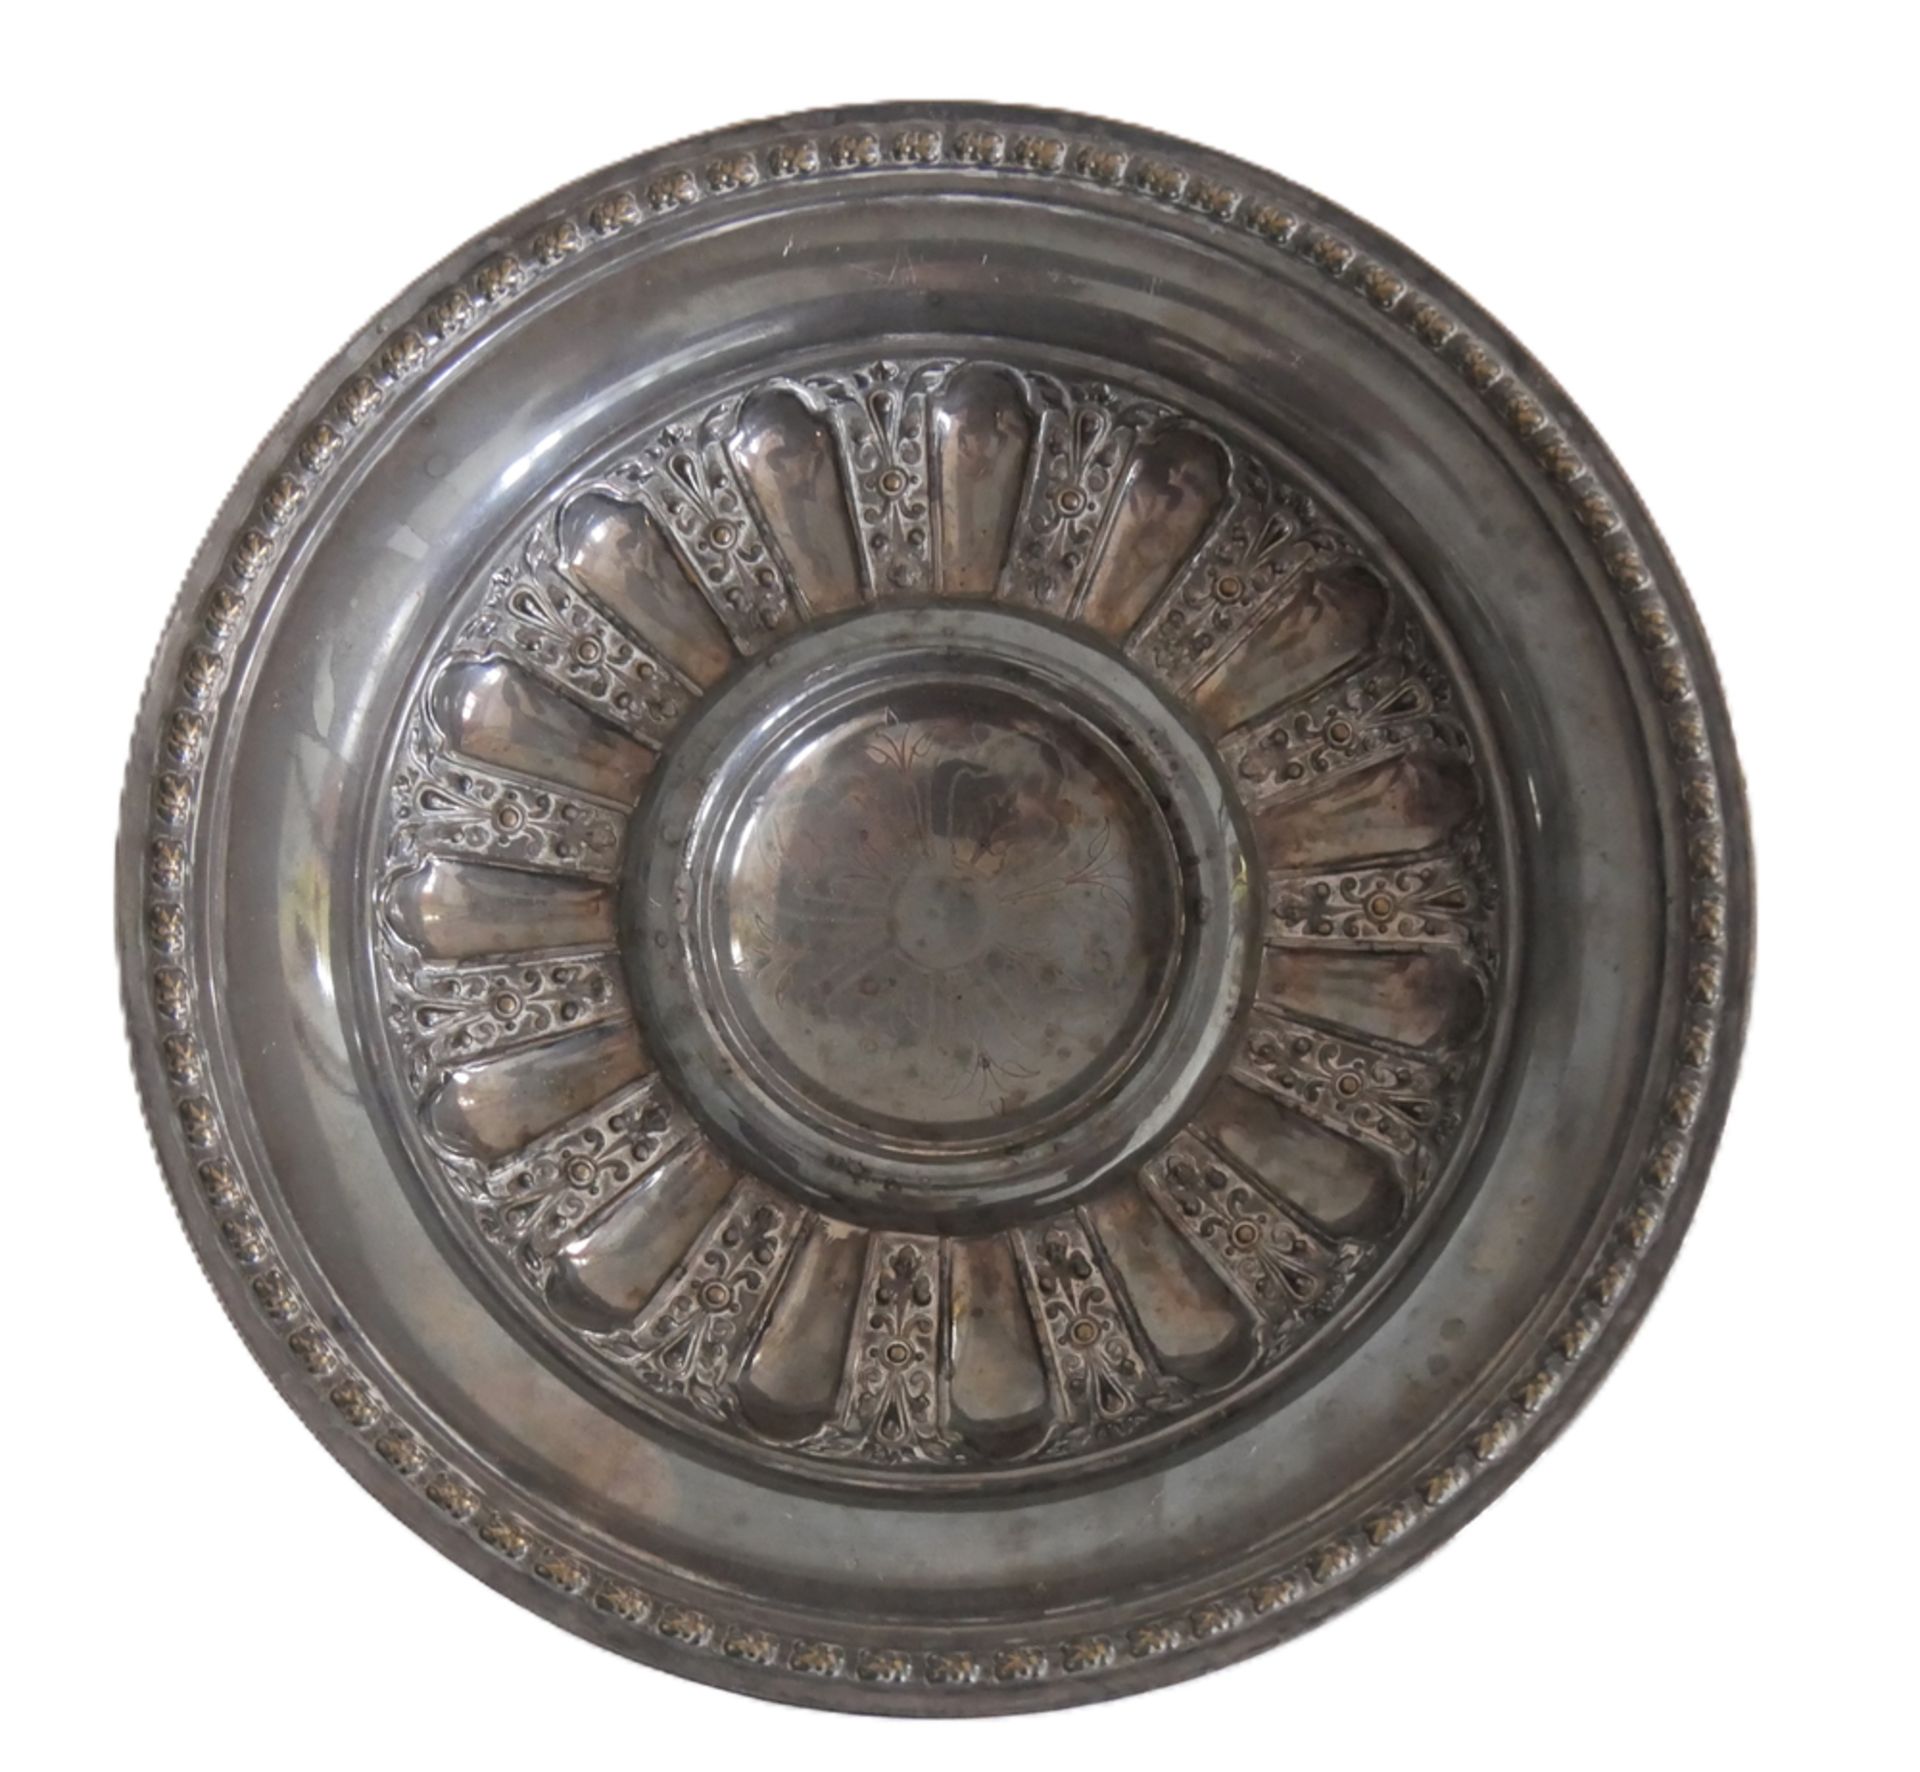 Fußschale Metall, mit Ornamenten verziert. Höhe ca. 10,5 cm, Durchmesser ca. 25,8 cm - Image 2 of 2